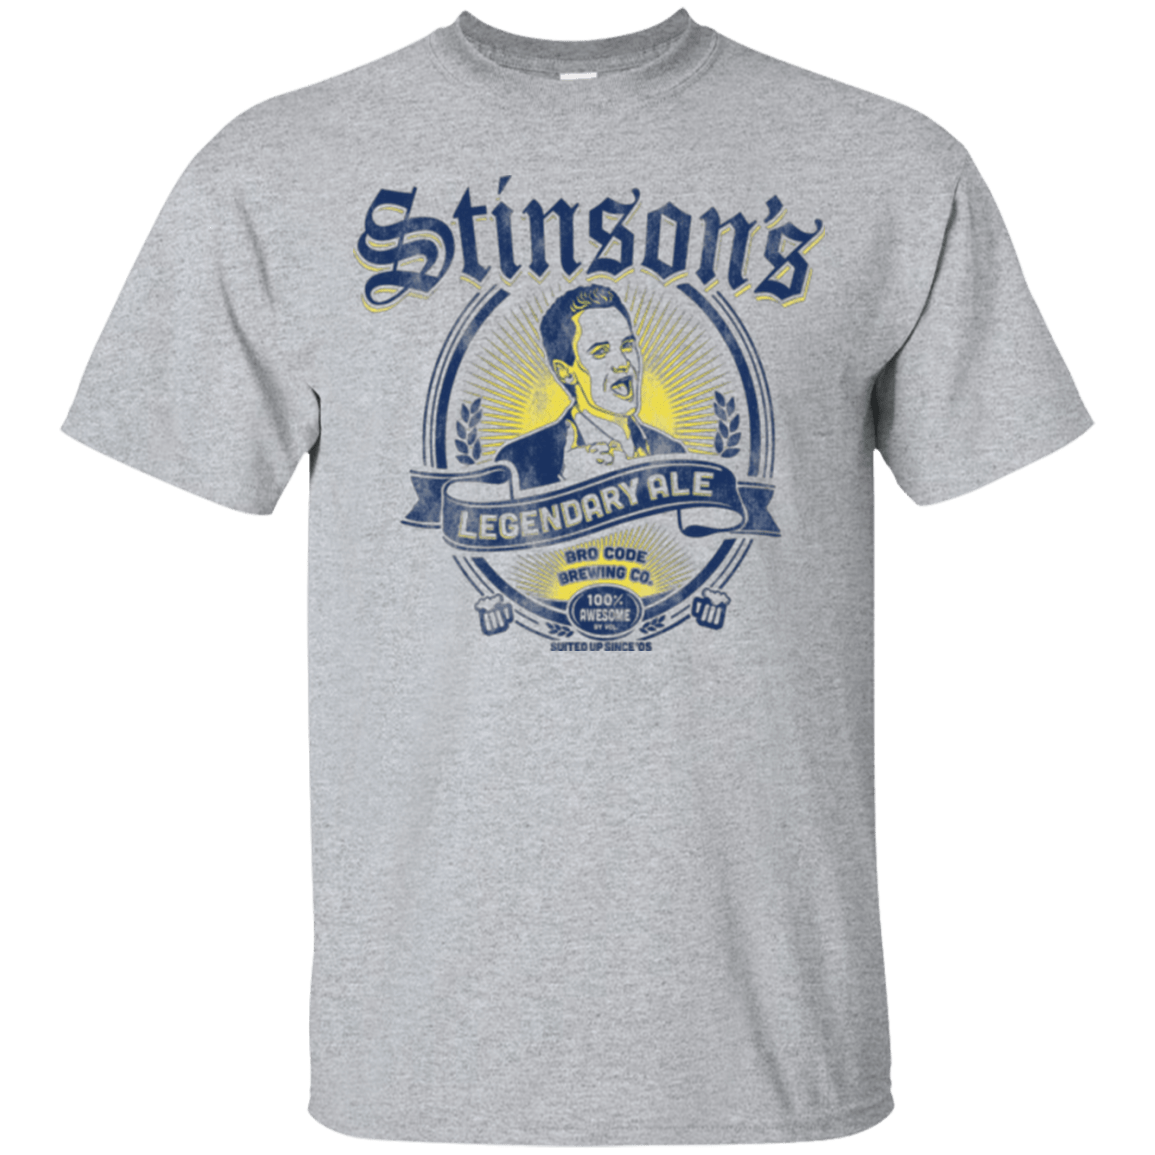 T-Shirts Sport Grey / Small Stinsons Legendary Ale T-Shirt